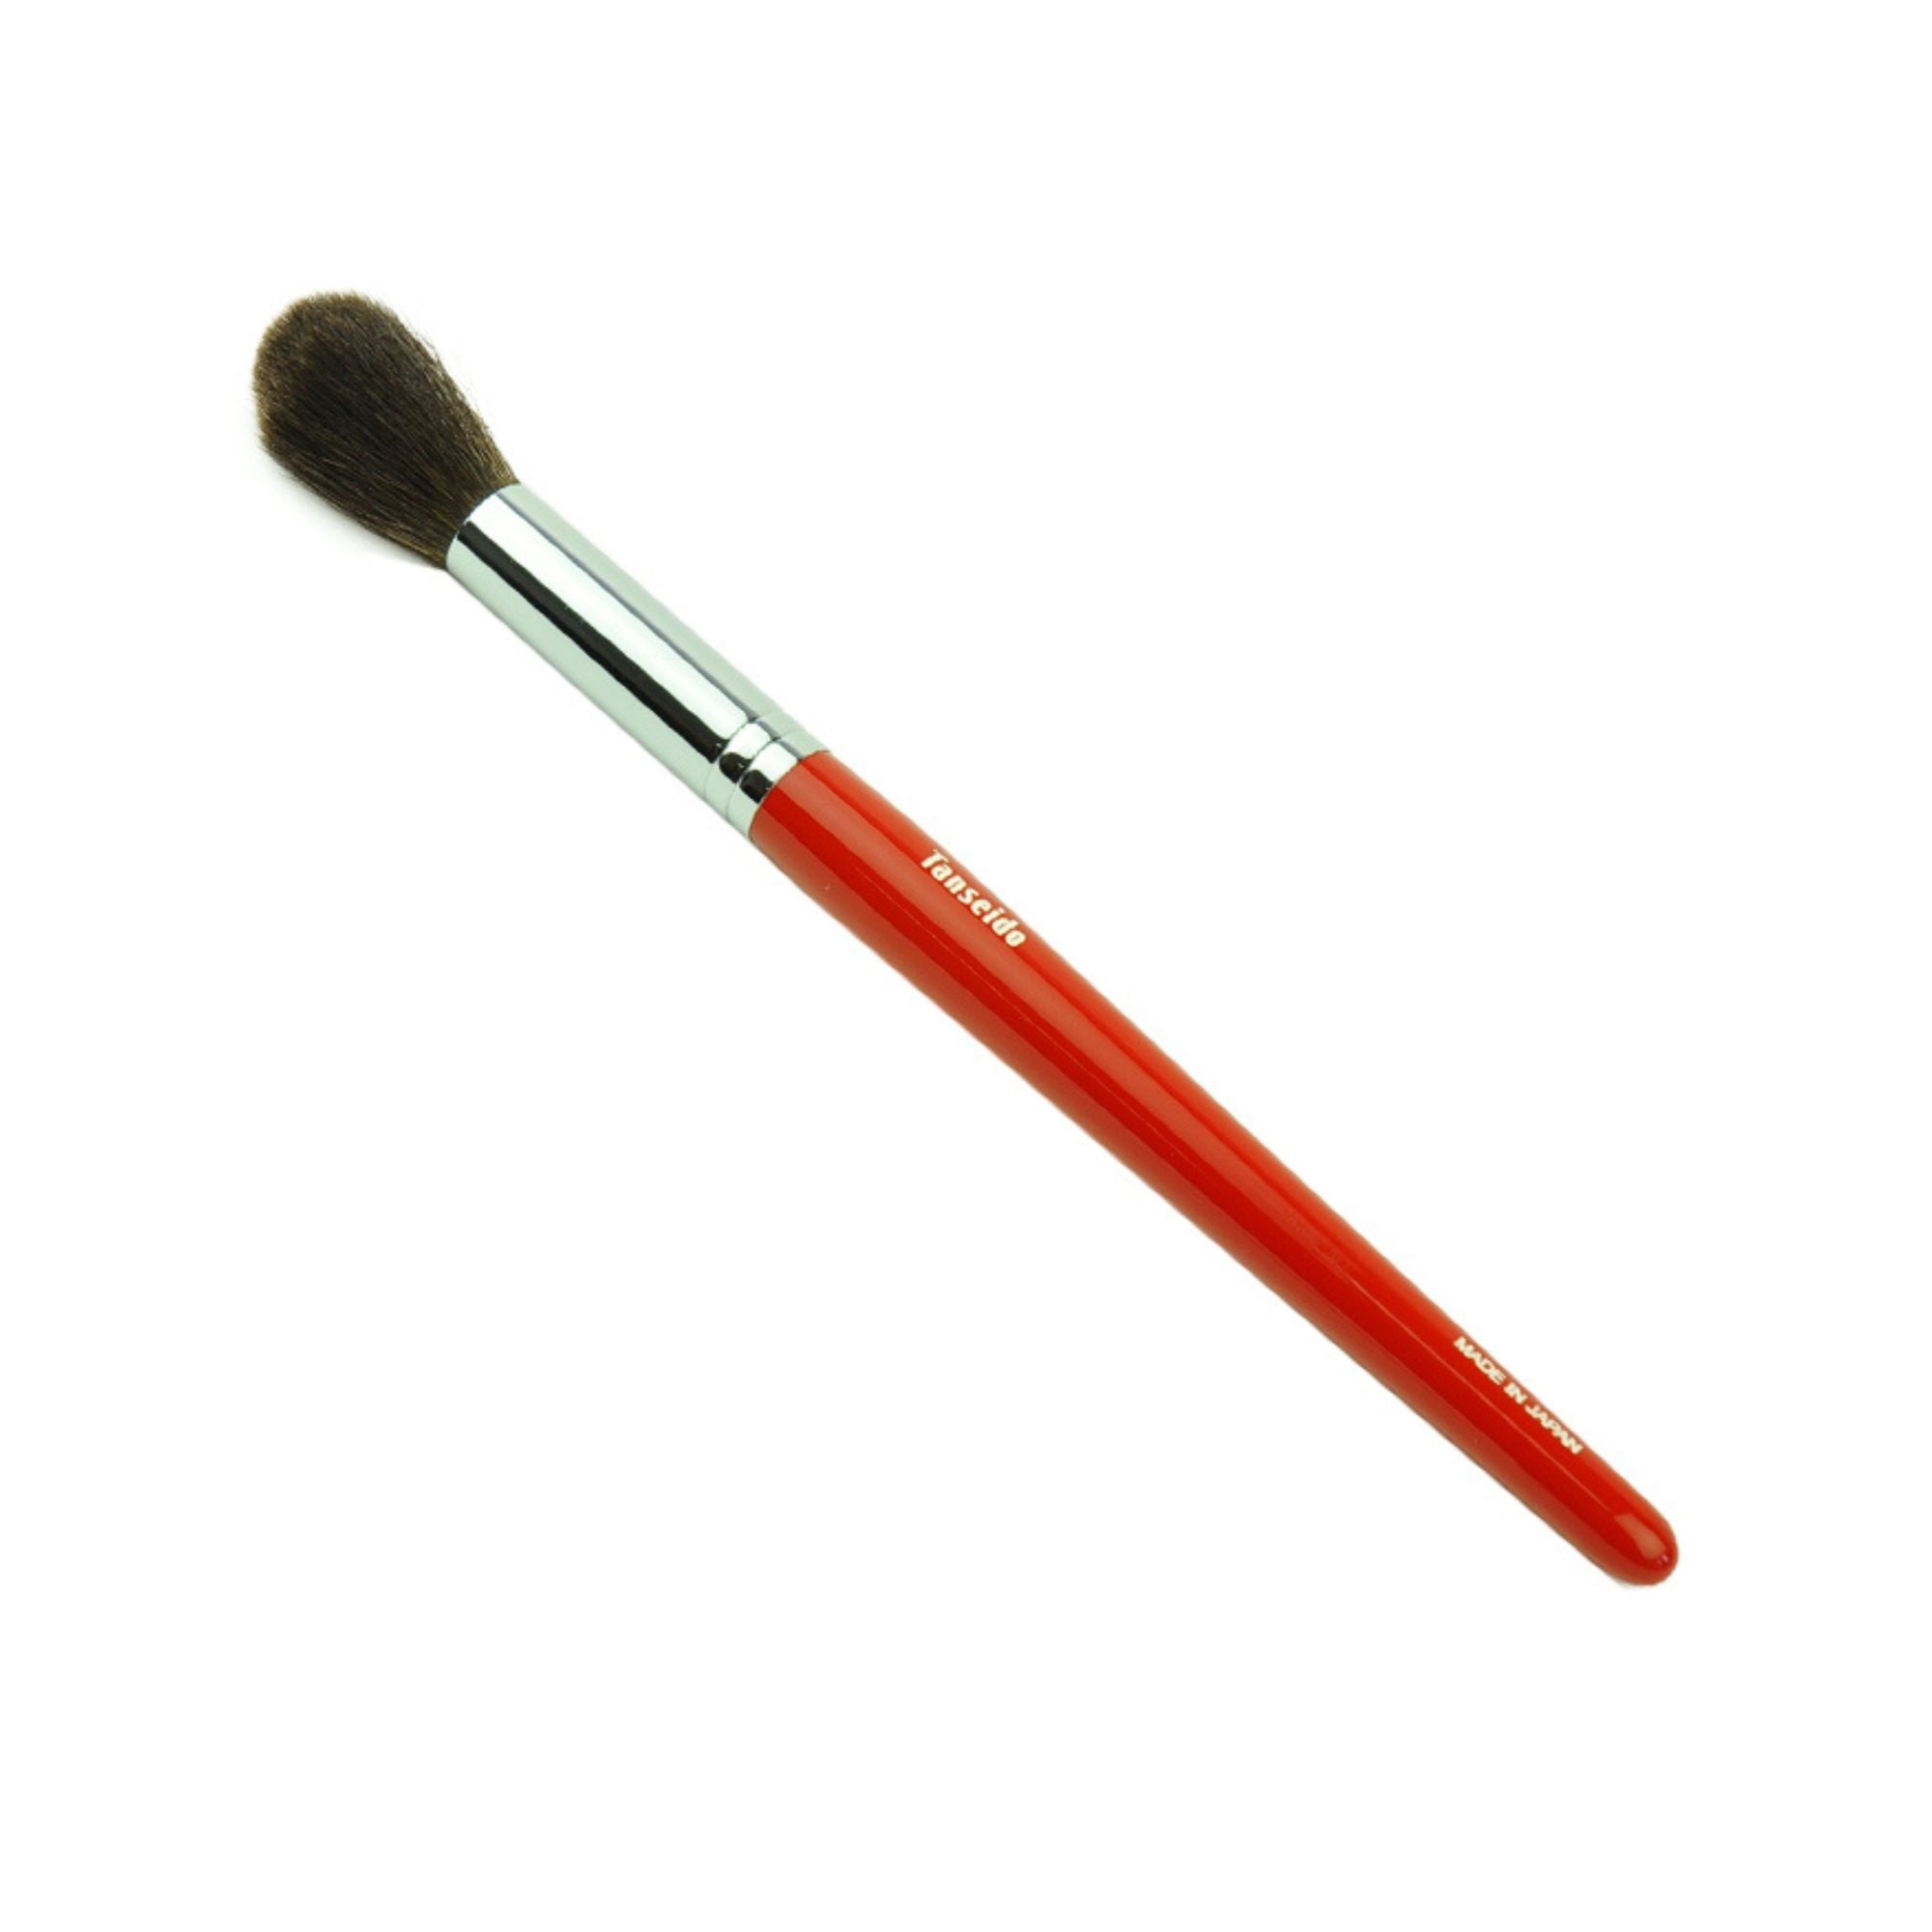 Tanseido YSS17 Highlight Brush - Fude Beauty, Japanese Makeup Brushes